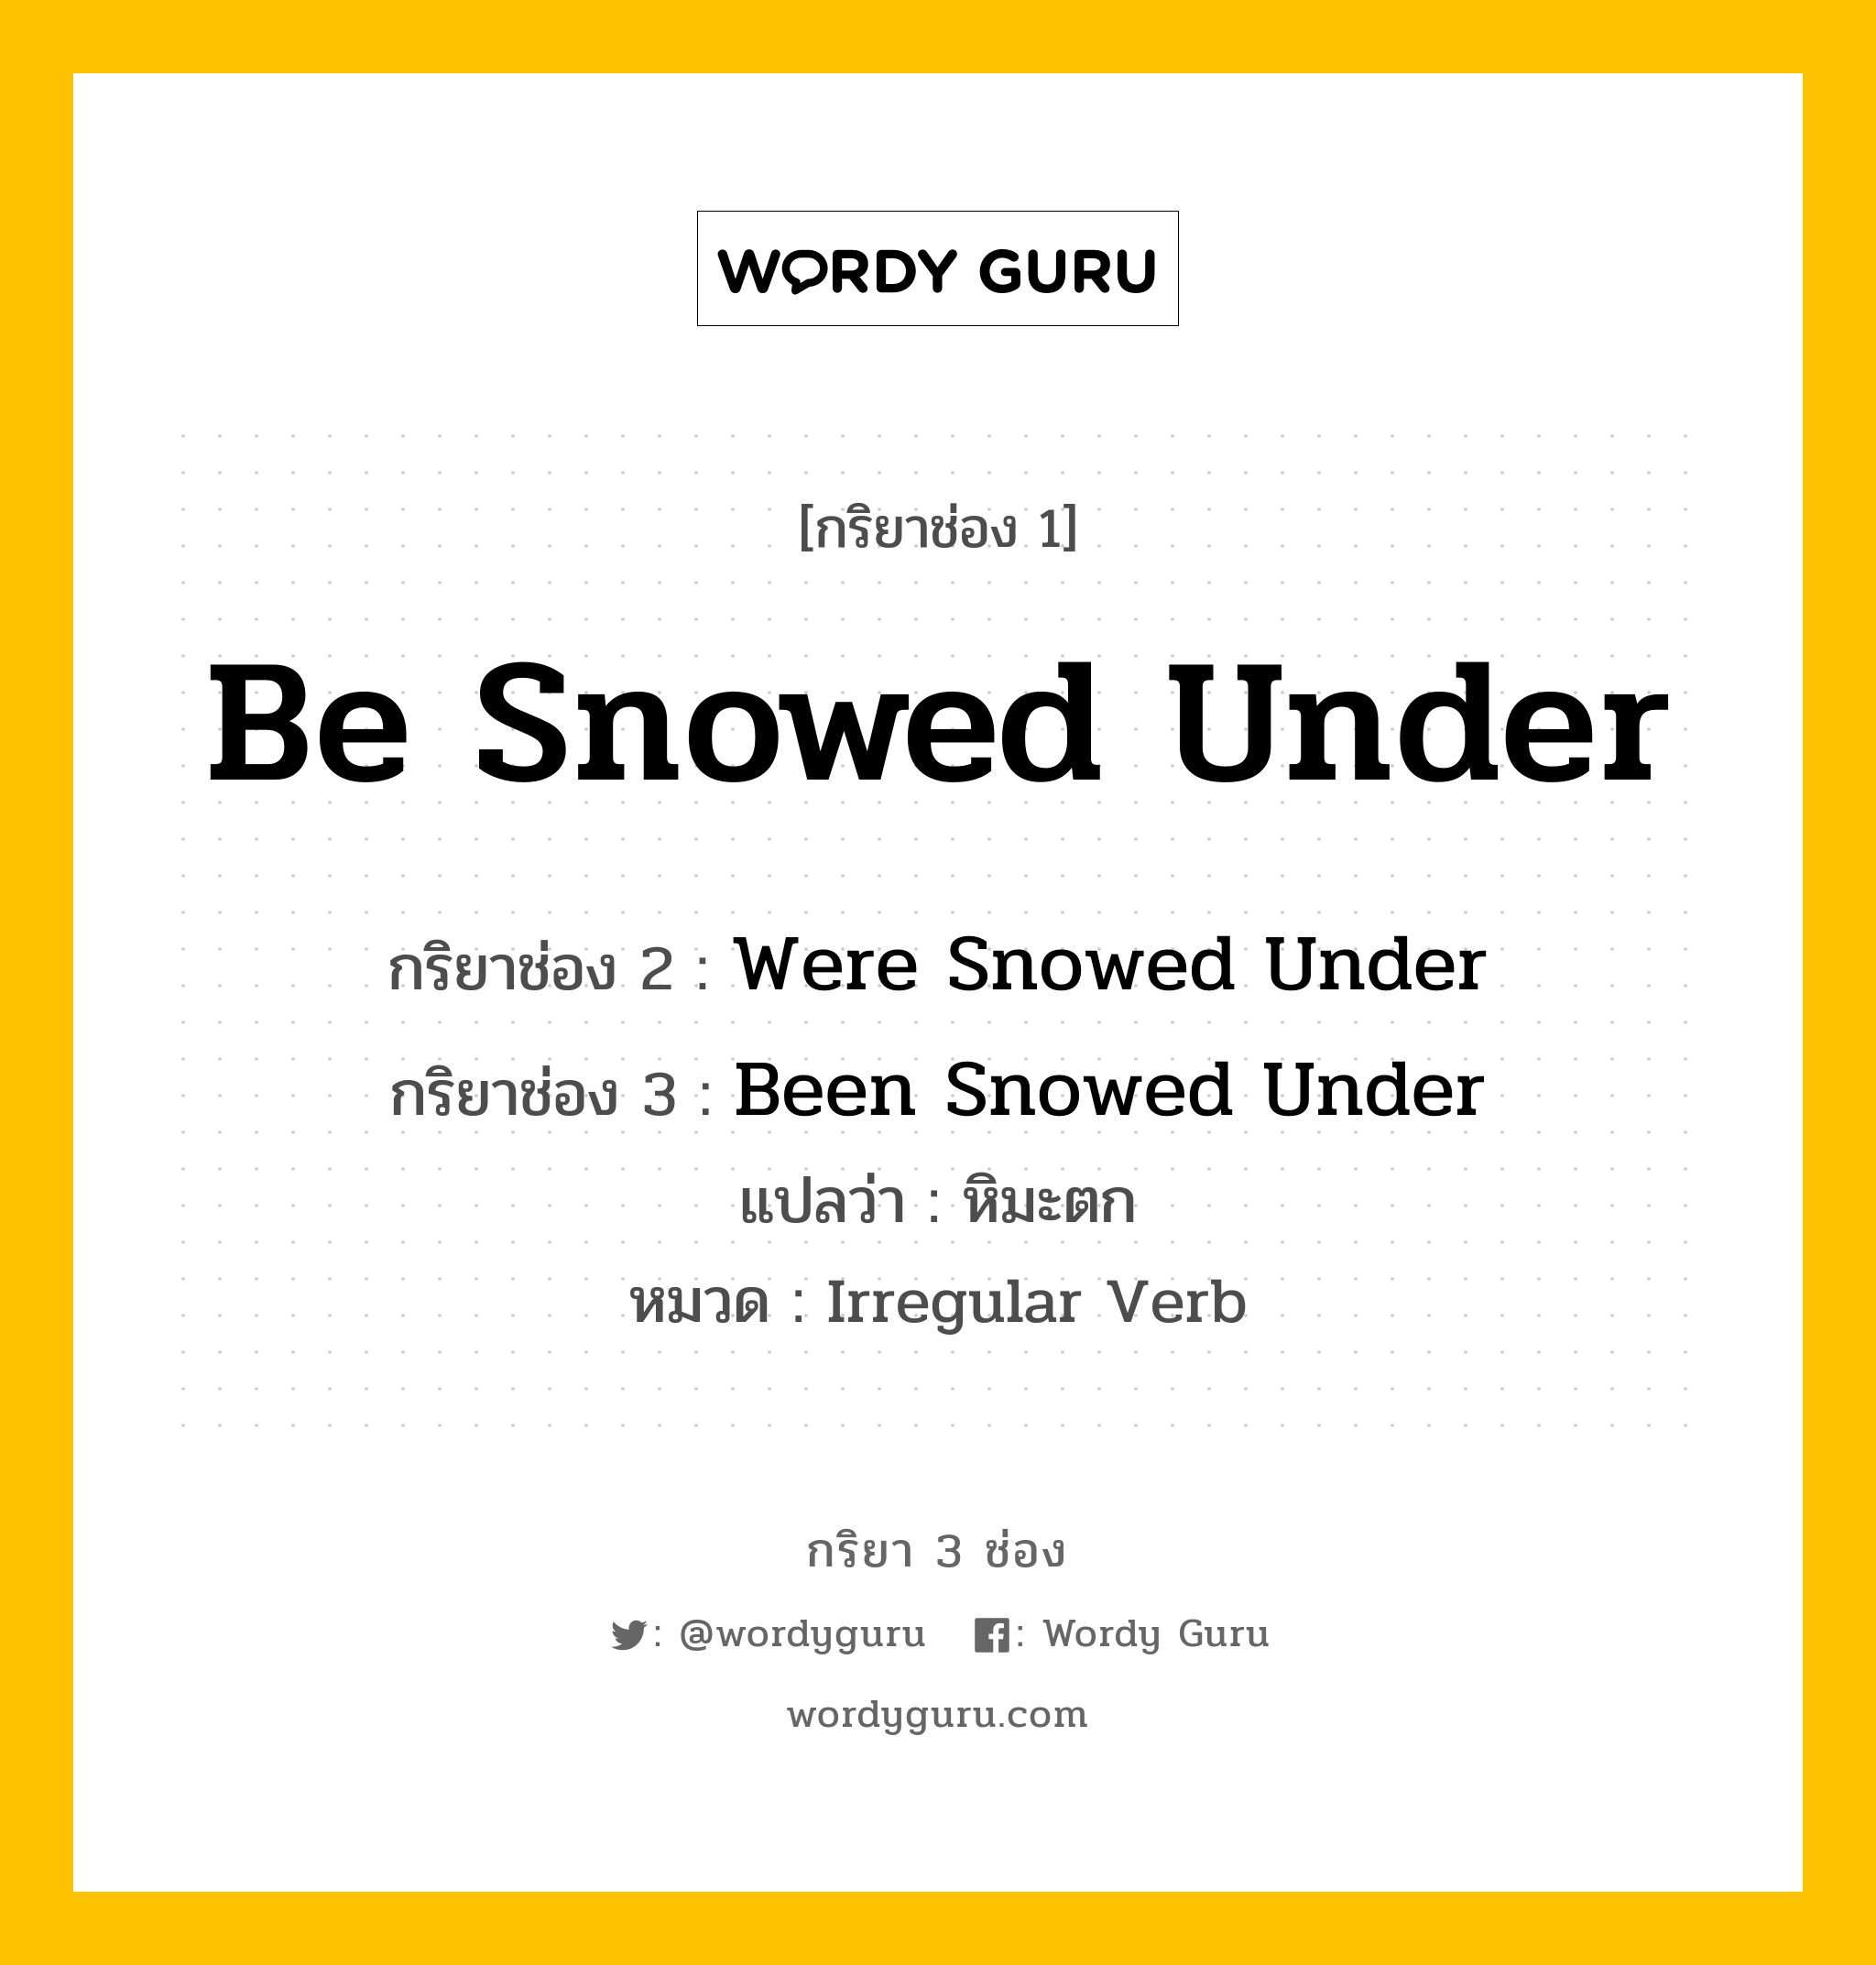 Be Snowed Under มีกริยา 3 ช่องอะไรบ้าง? คำศัพท์ในกลุ่มประเภท Irregular Verb, กริยาช่อง 1 Be Snowed Under กริยาช่อง 2 Were Snowed Under กริยาช่อง 3 Been Snowed Under แปลว่า หิมะตก หมวด Irregular Verb หมวด Irregular Verb